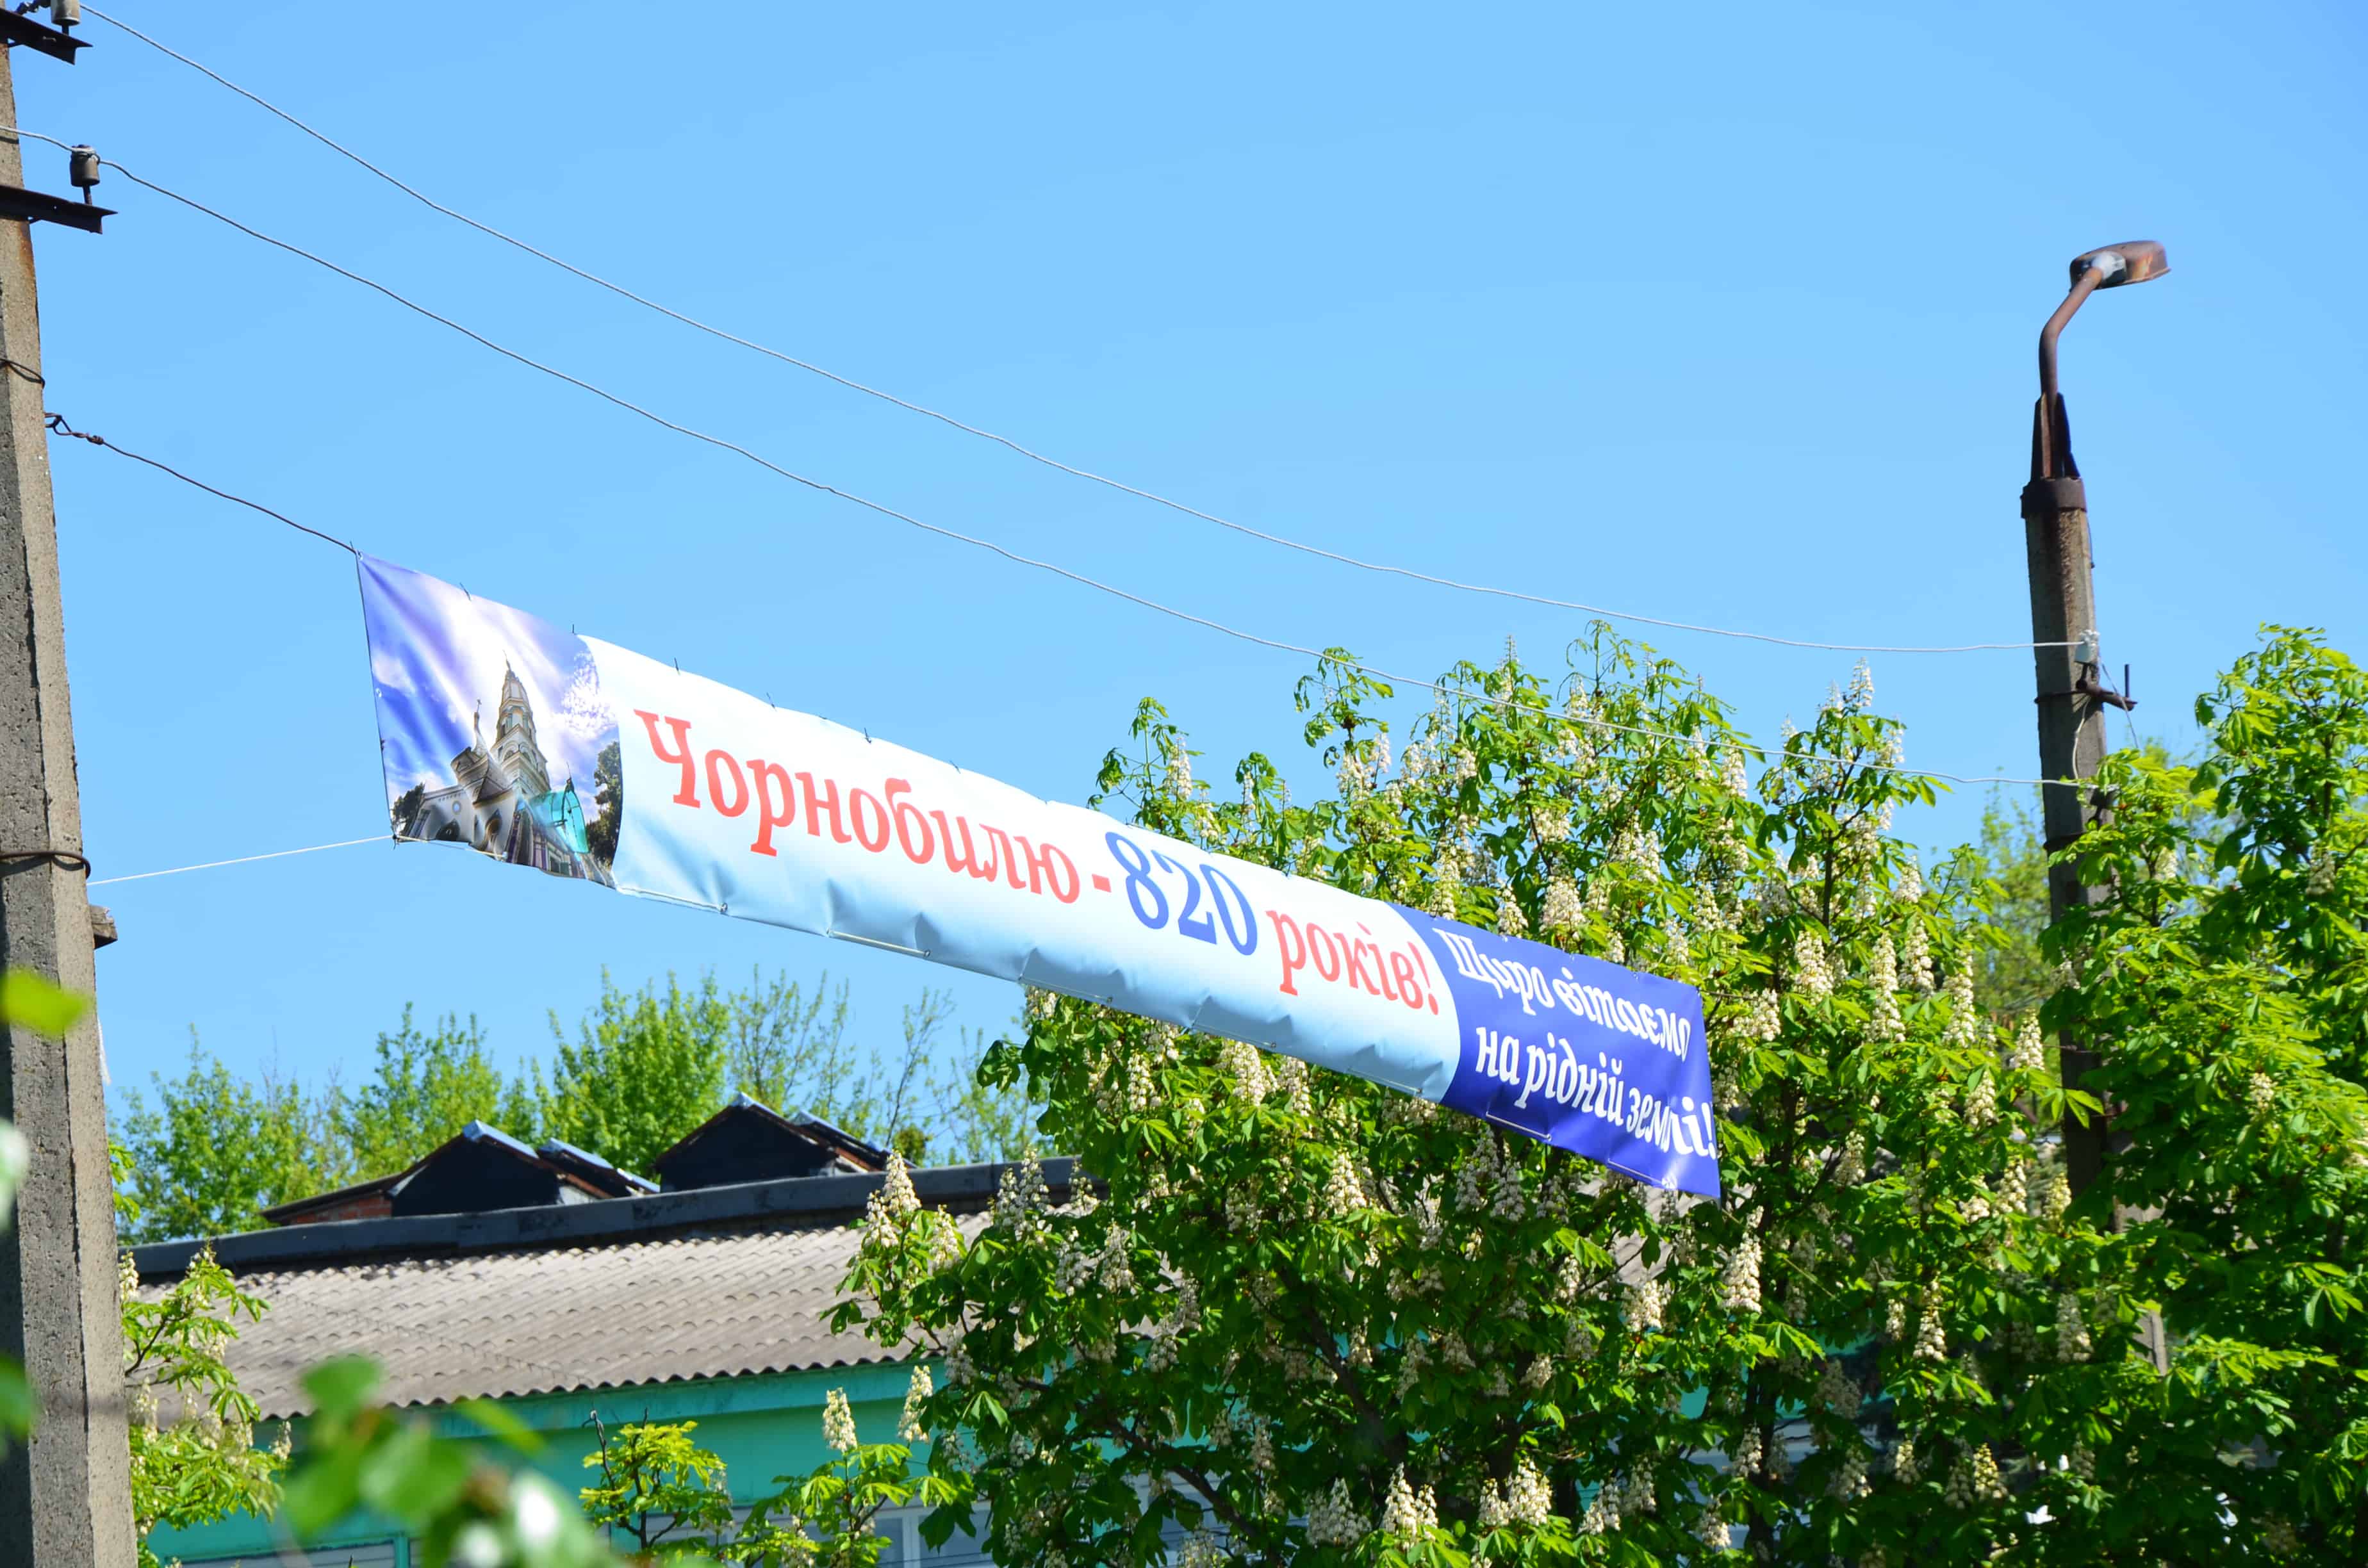 Chernobyl 820th anniversary banner in Chernobyl, Chernobyl Exclusion Zone, Ukraine